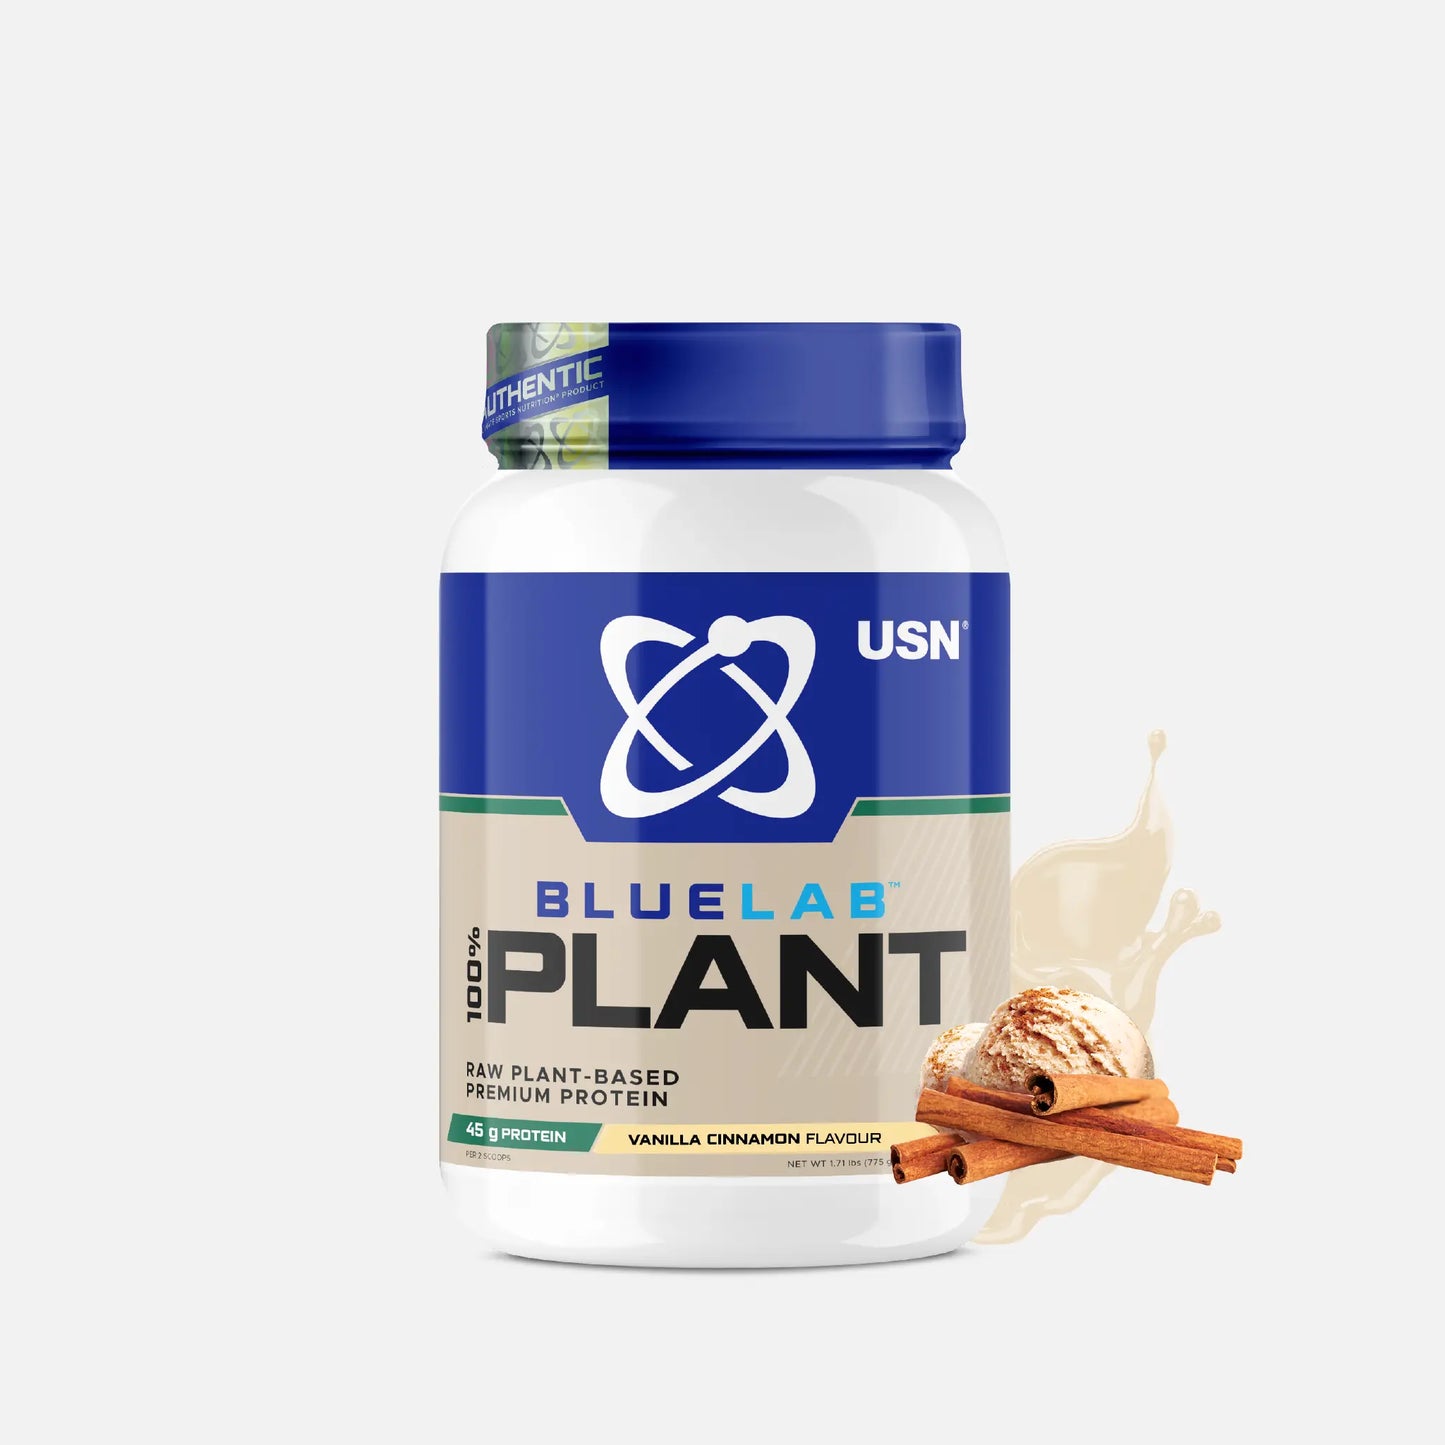 bluelab plant protein vanilla cinnamon